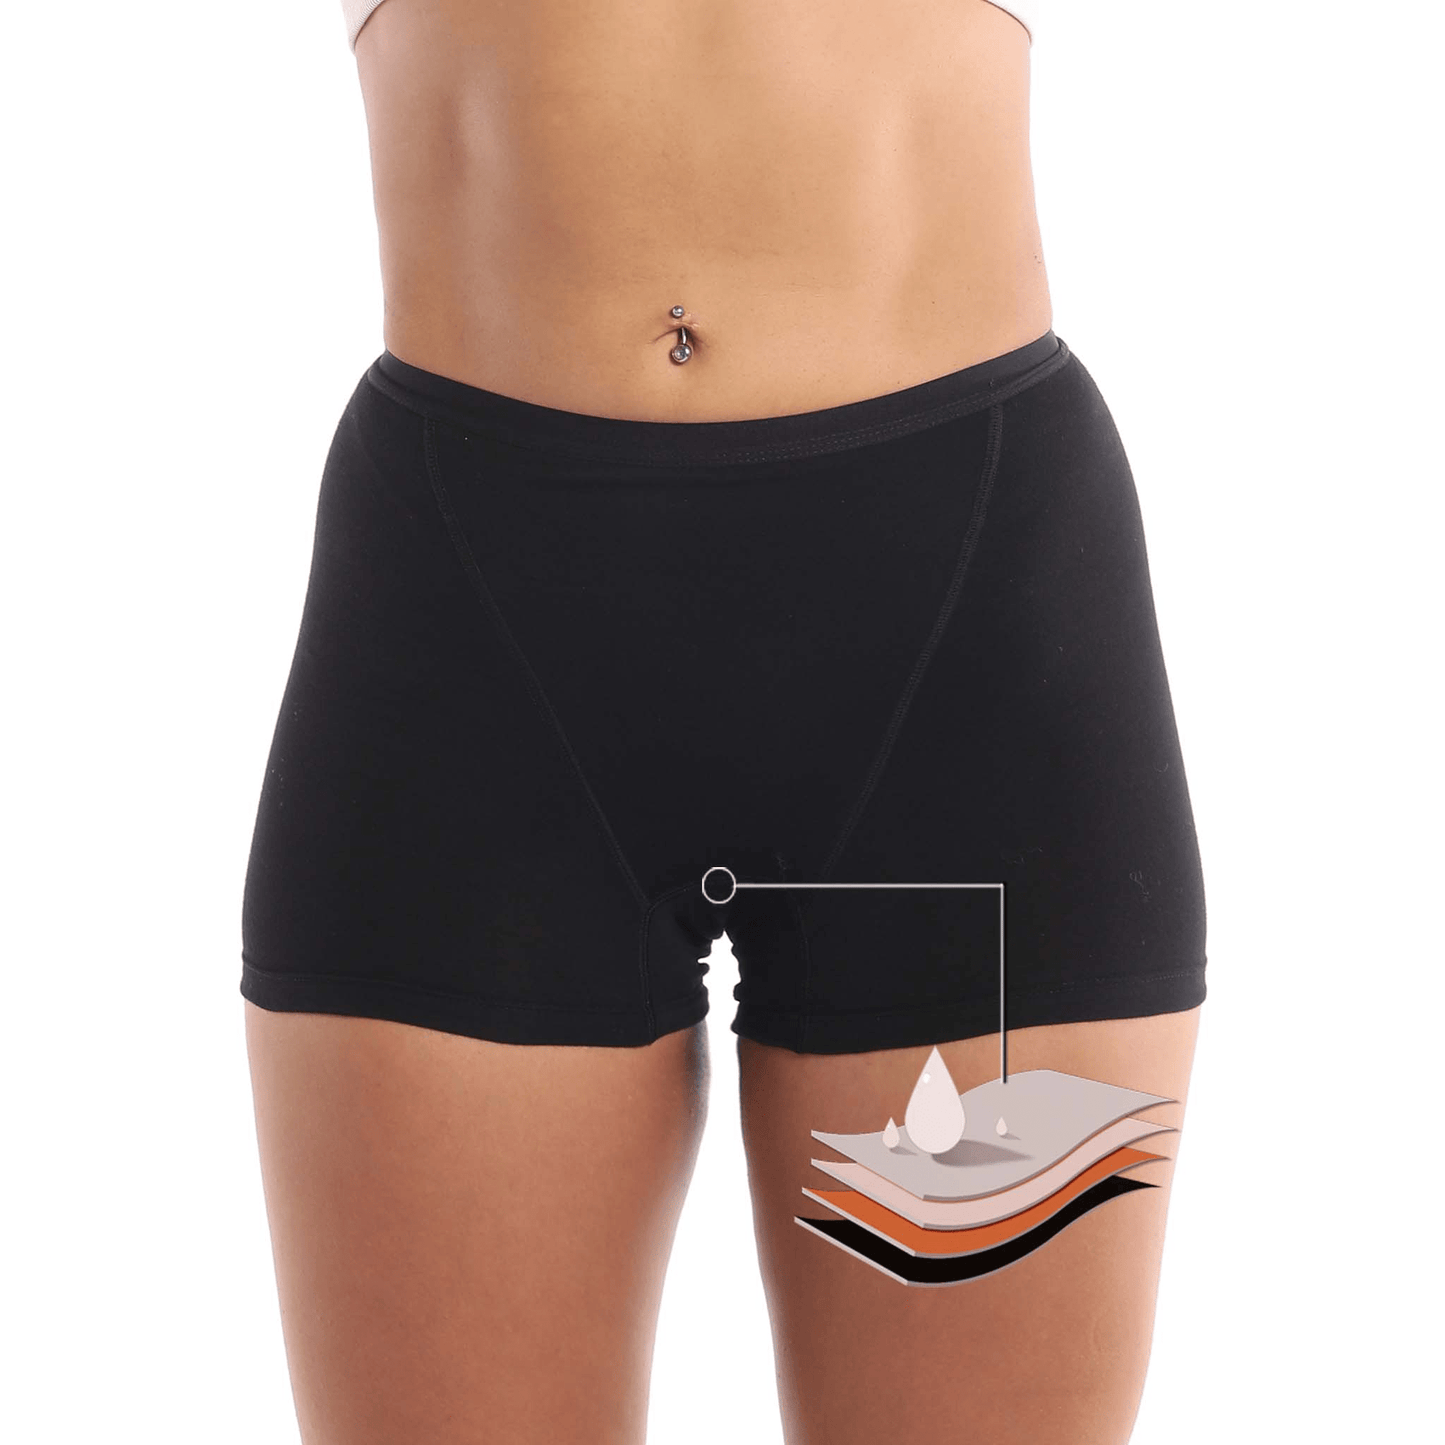 PeriodWear heavy flow menstrual boxer panties